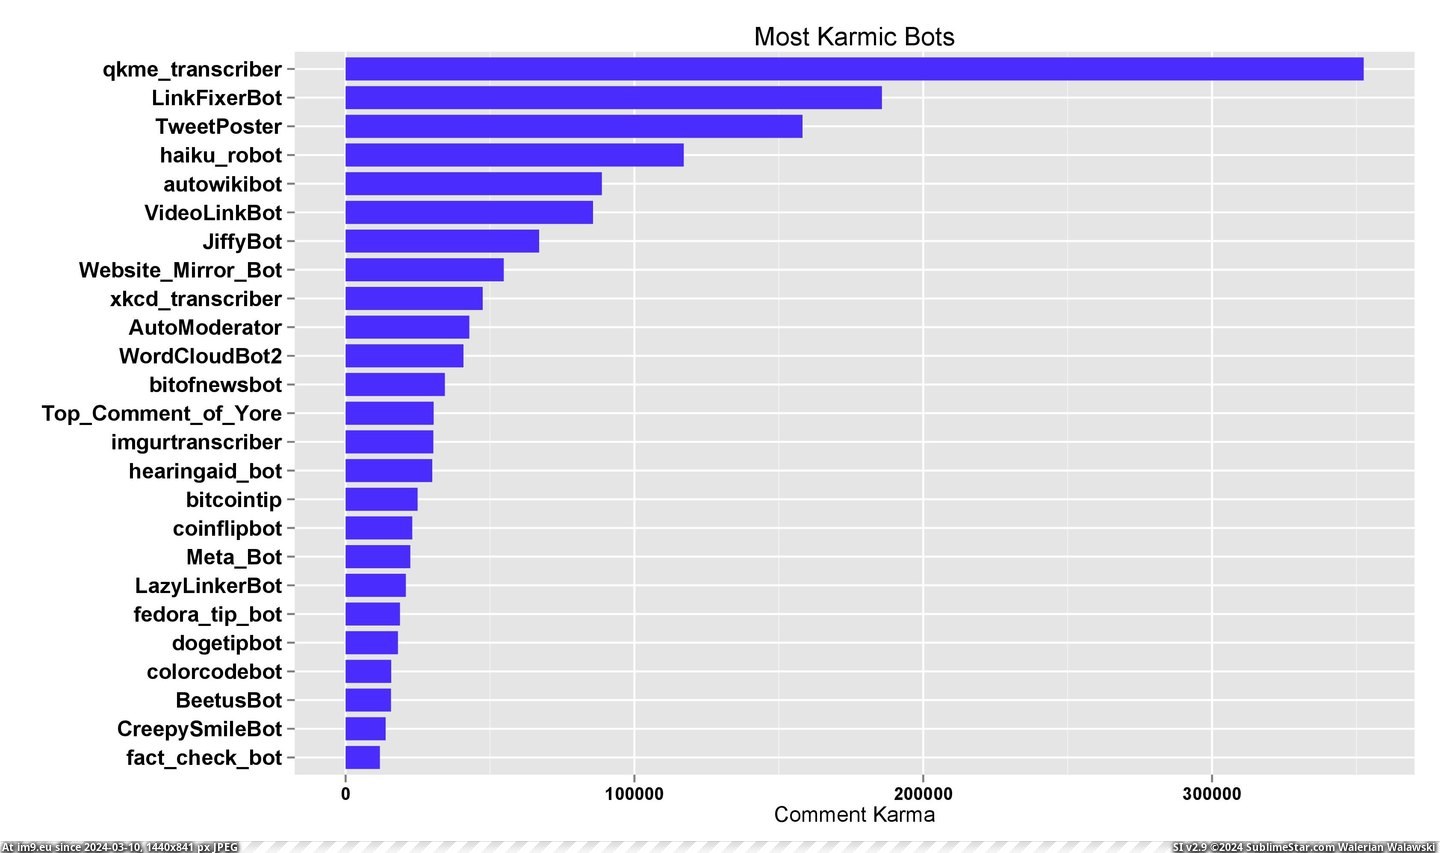 #Quality #Bots #Karmic #Higher [Dataisbeautiful] [OC] Most Karmic Reddit Bots - Higher quality 1 Pic. (Image of album My r/DATAISBEAUTIFUL favs))